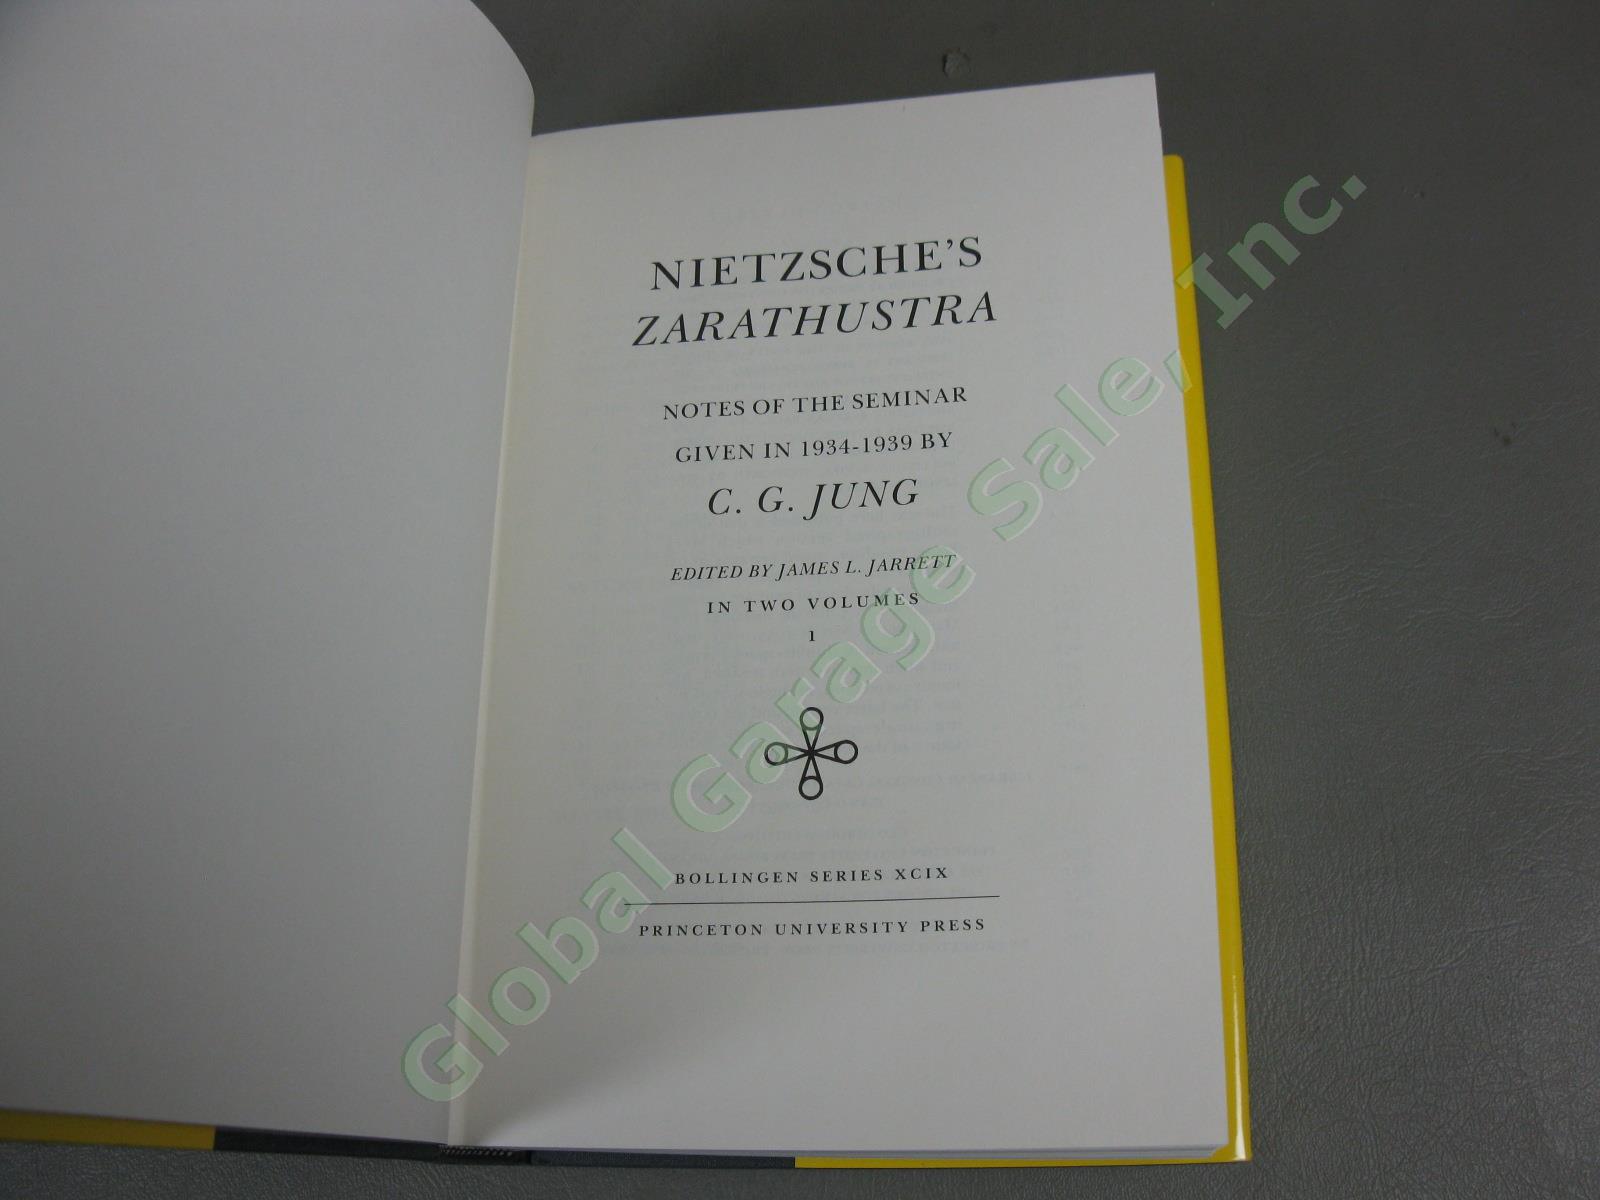 MINT! Never Read! 1st Edition CJ Jung Nietzsches Zarathustra Seminars Vol I II 4